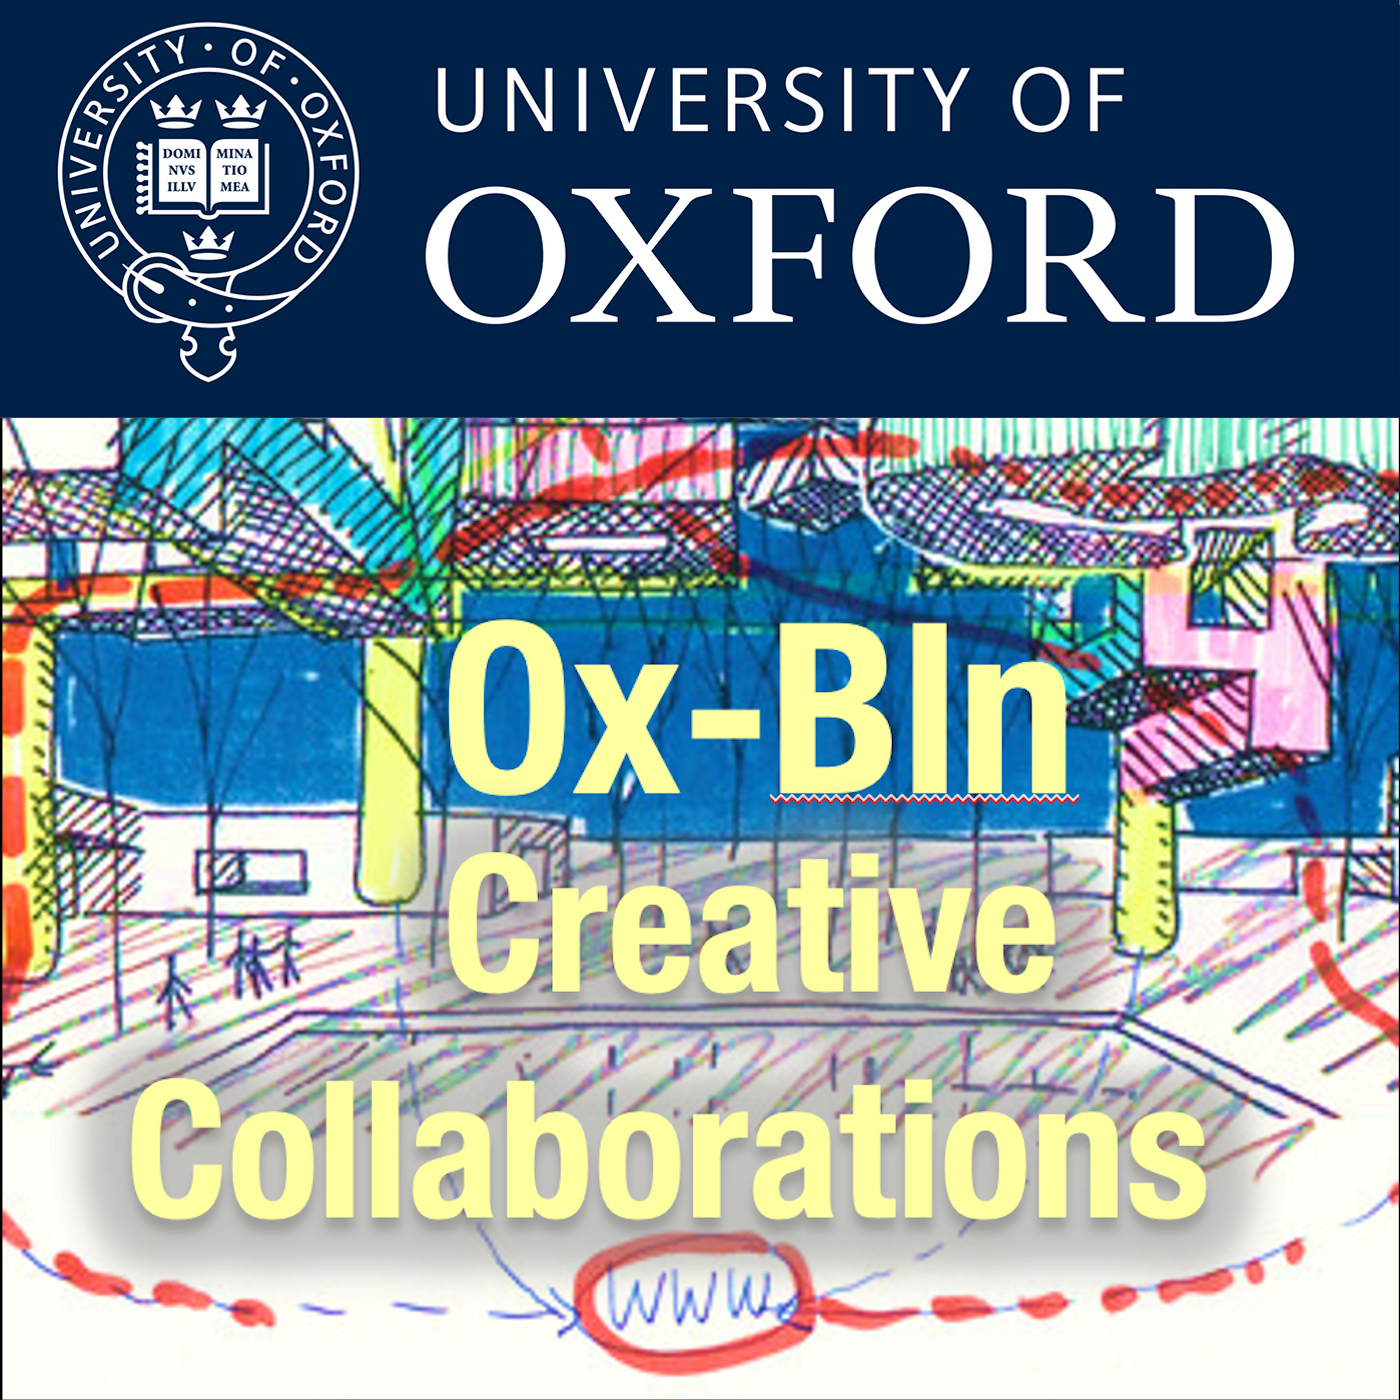 The Oxford/Berlin Creative Collaborations